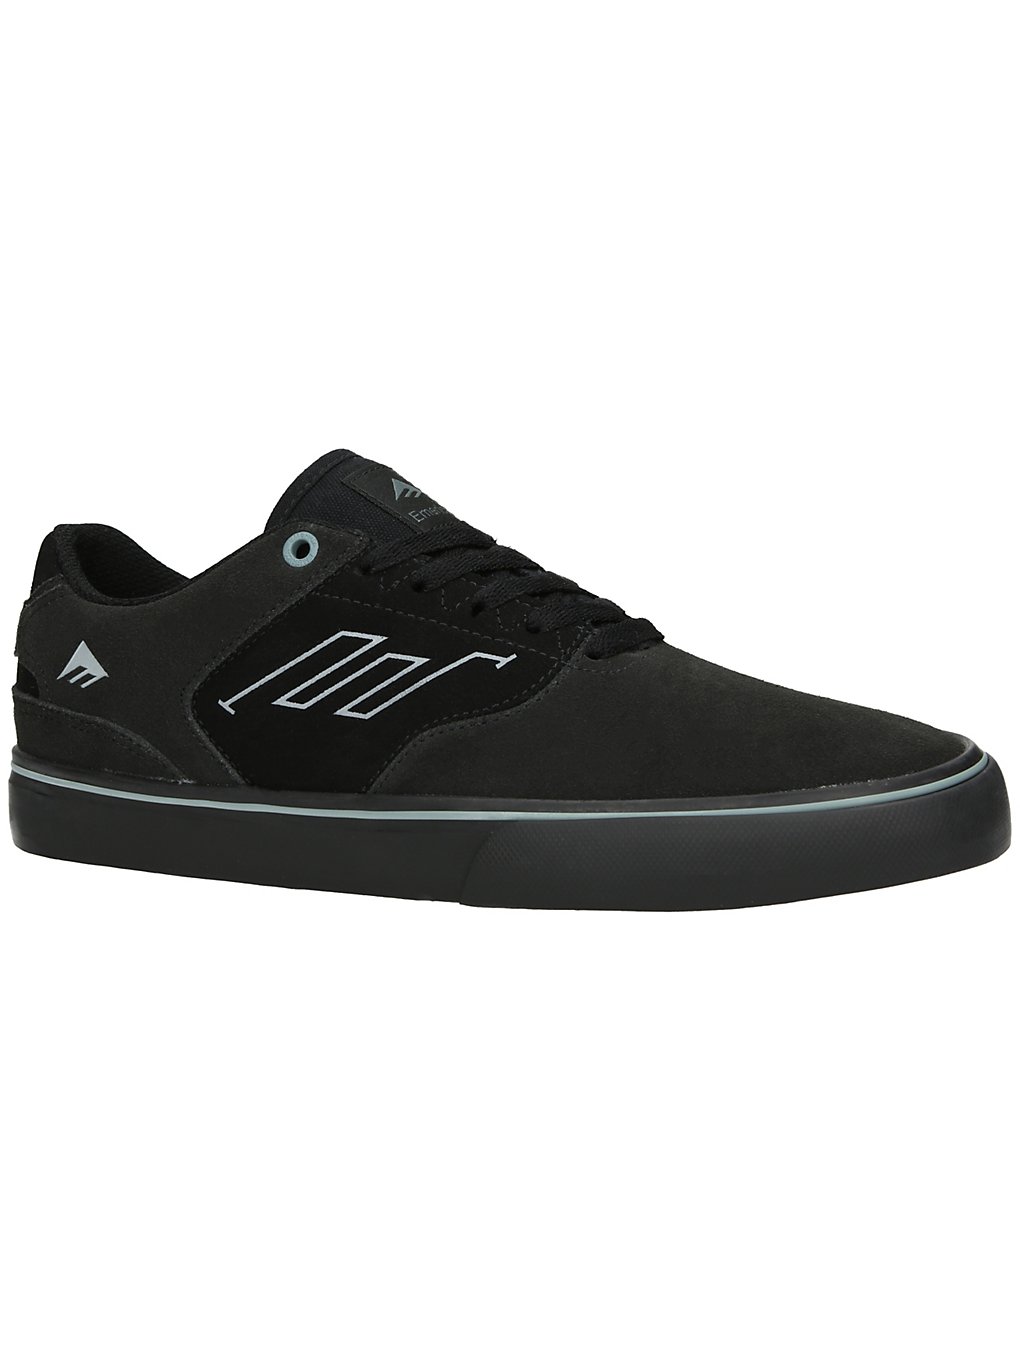 Emerica The Low Vulc Skate Shoes grey/black/blue